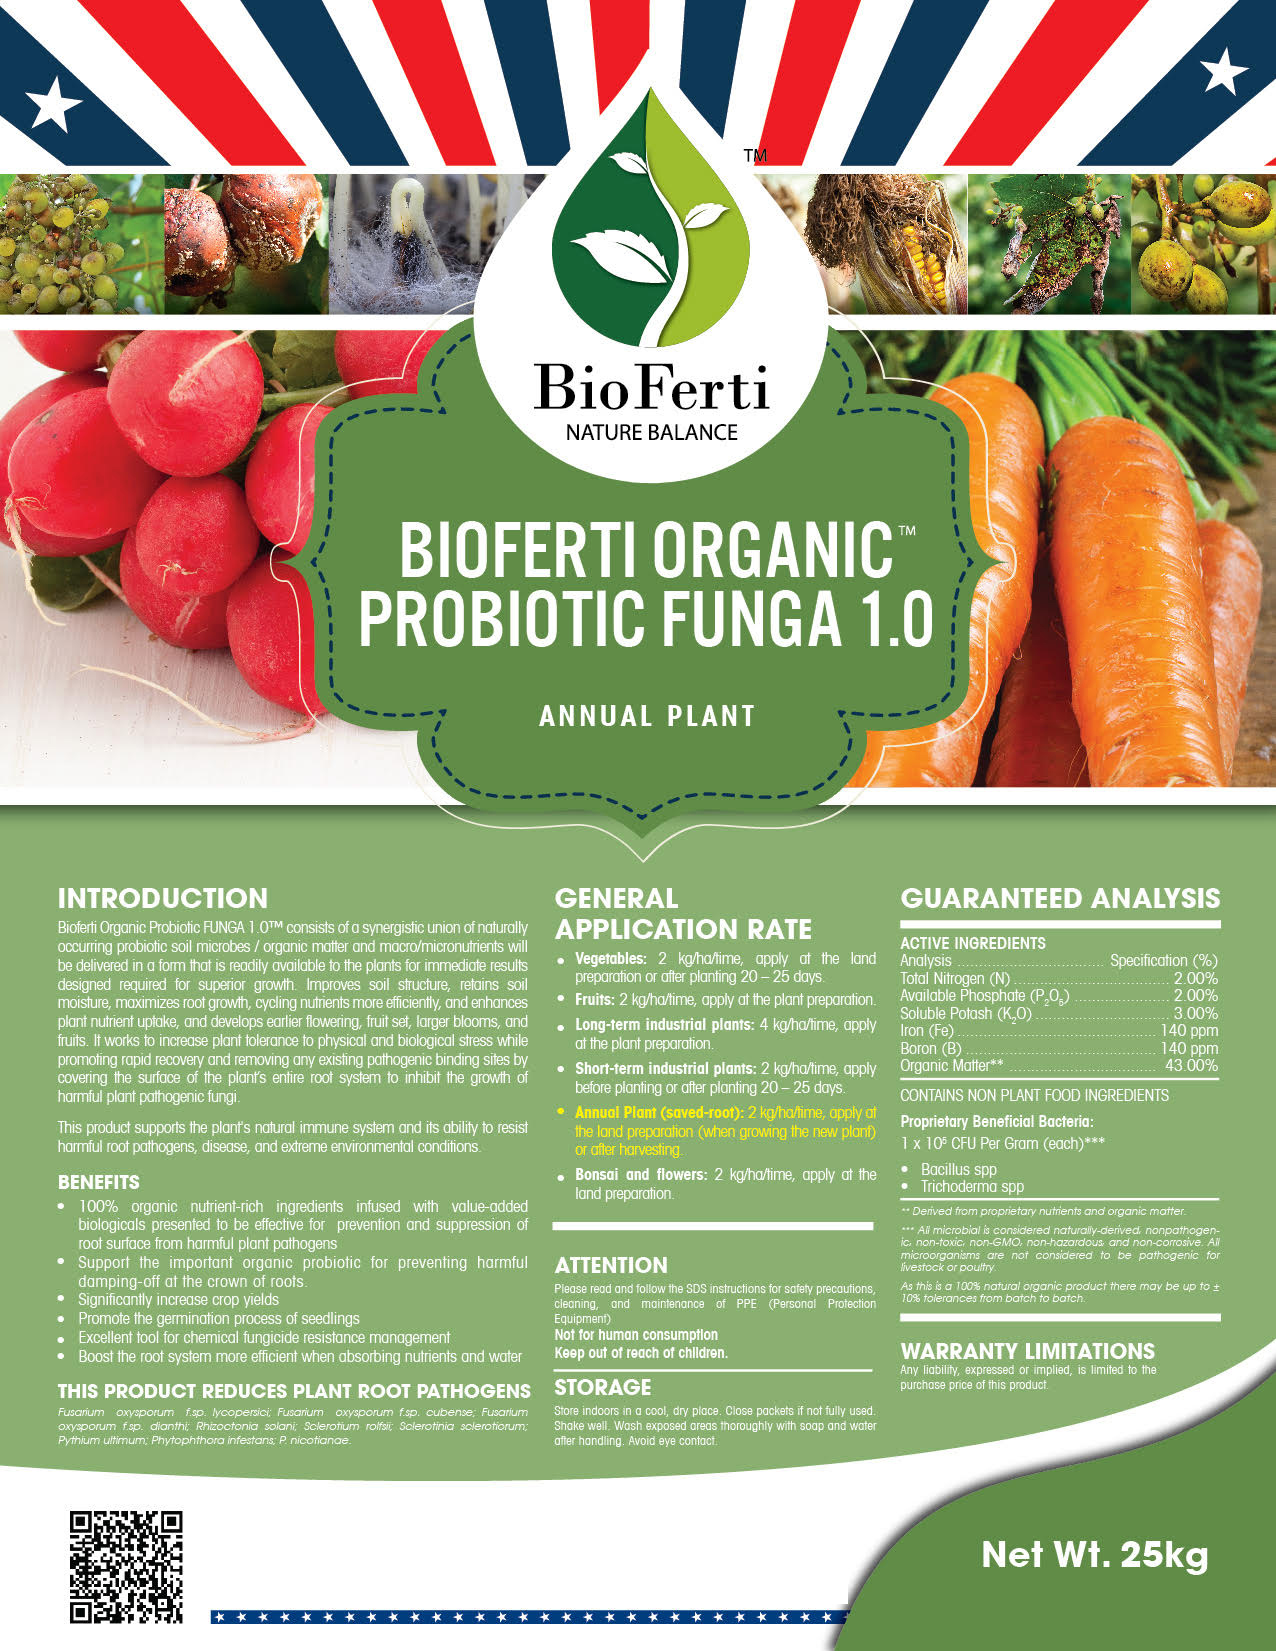 Bioferti Organic Probiotic Funga 1.0